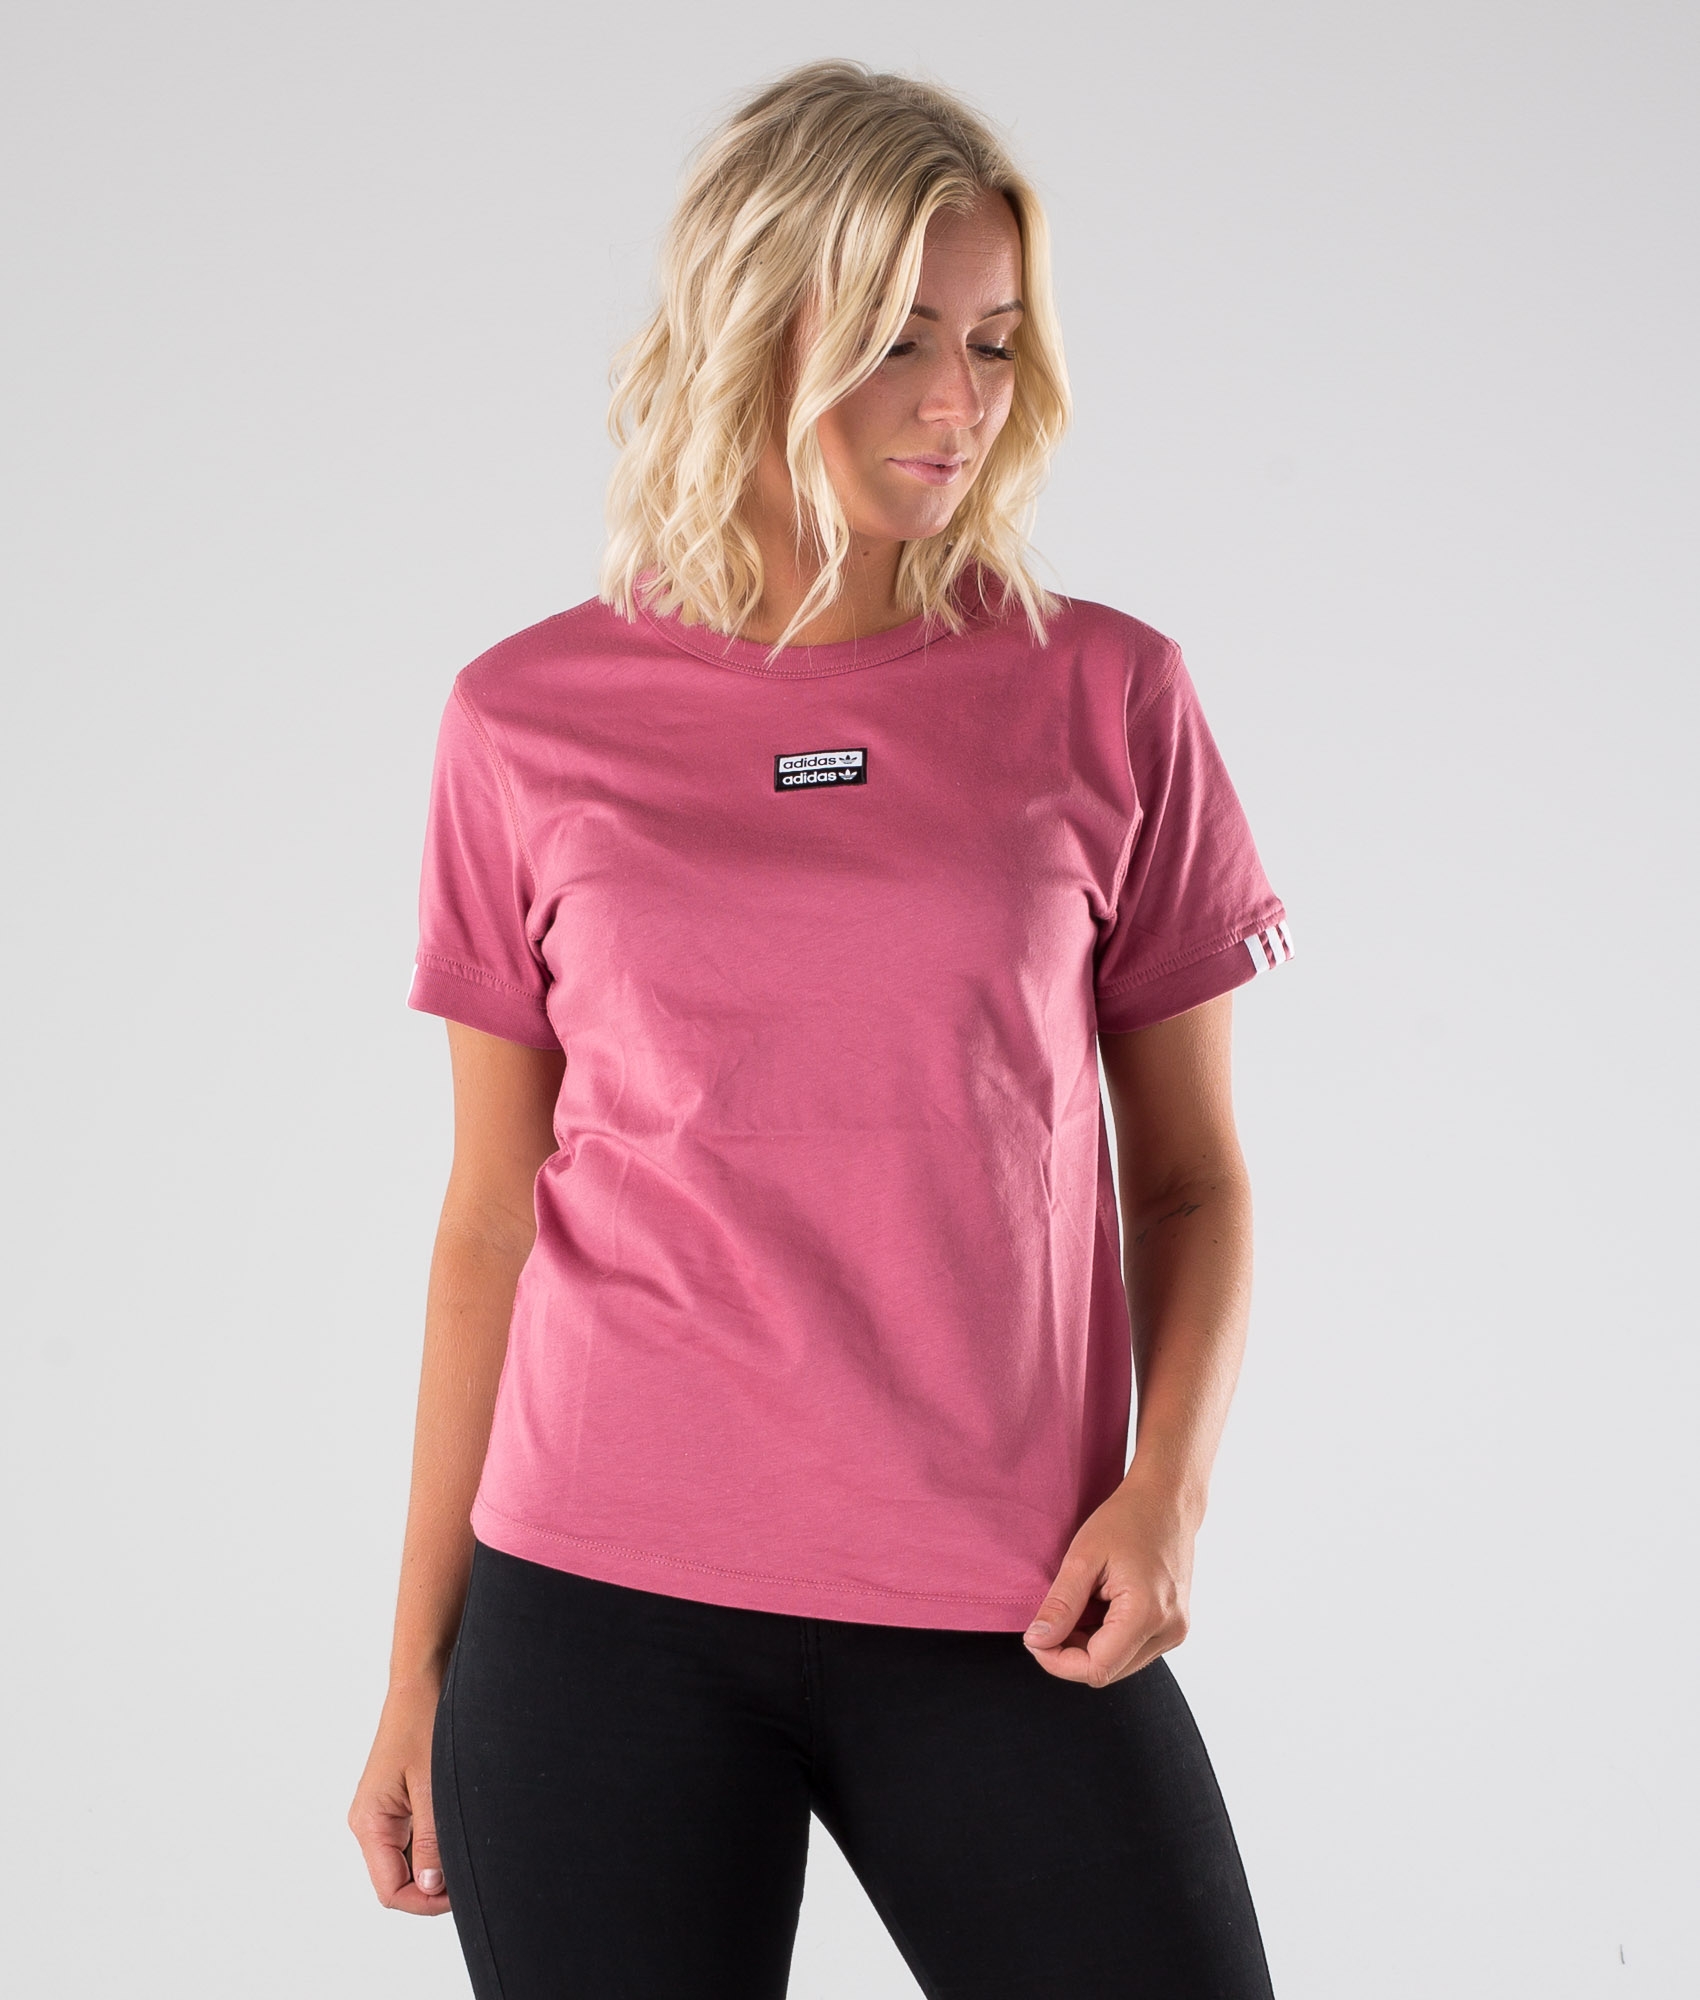 trace pink adidas shirt